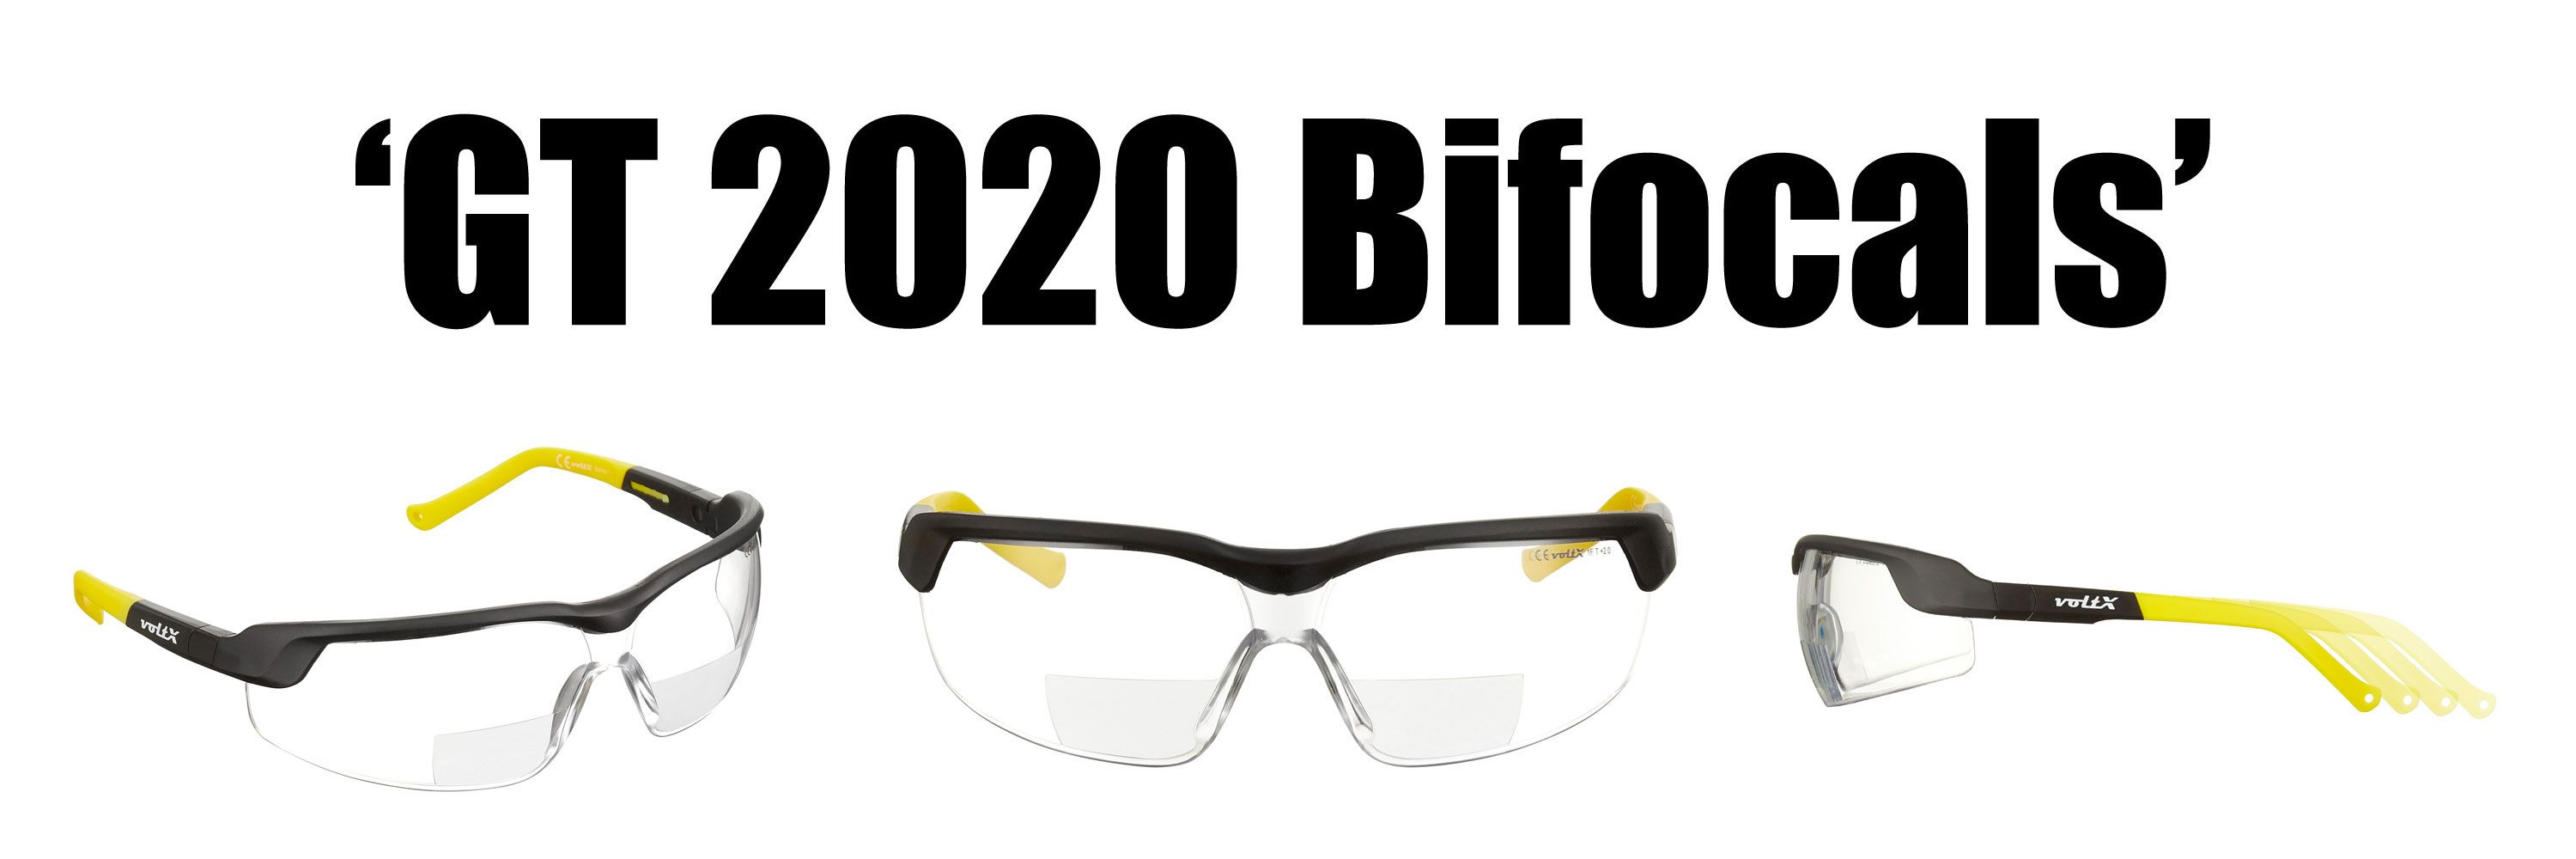 voltX CONSTRUCTOR BIFOCAL Reading Safety Glasses CE EN166F Mirror Class 1 